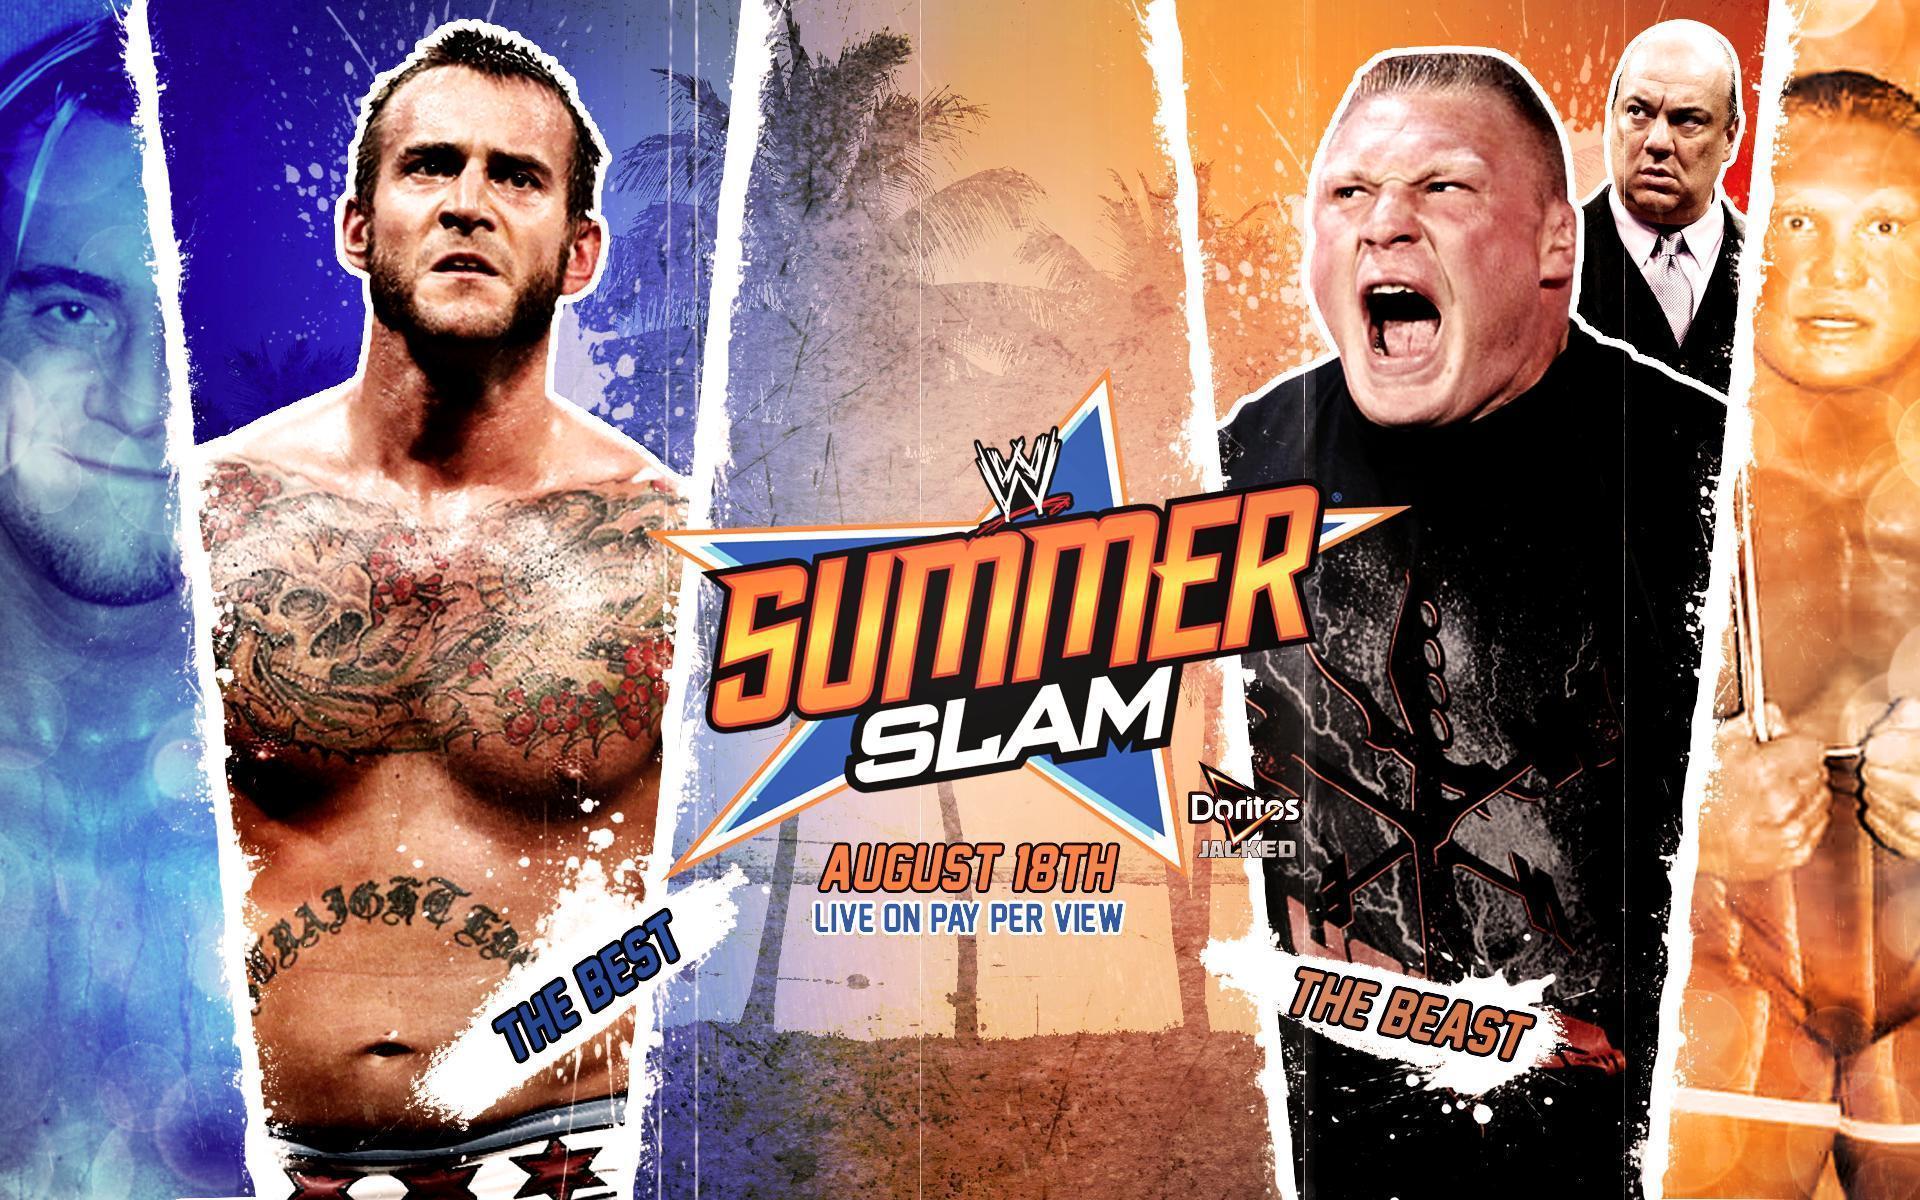 Free Download Wwe Summerslam 2016 John Cena Vs Brock Lesnar Wallpapers 1920x1200 For Your